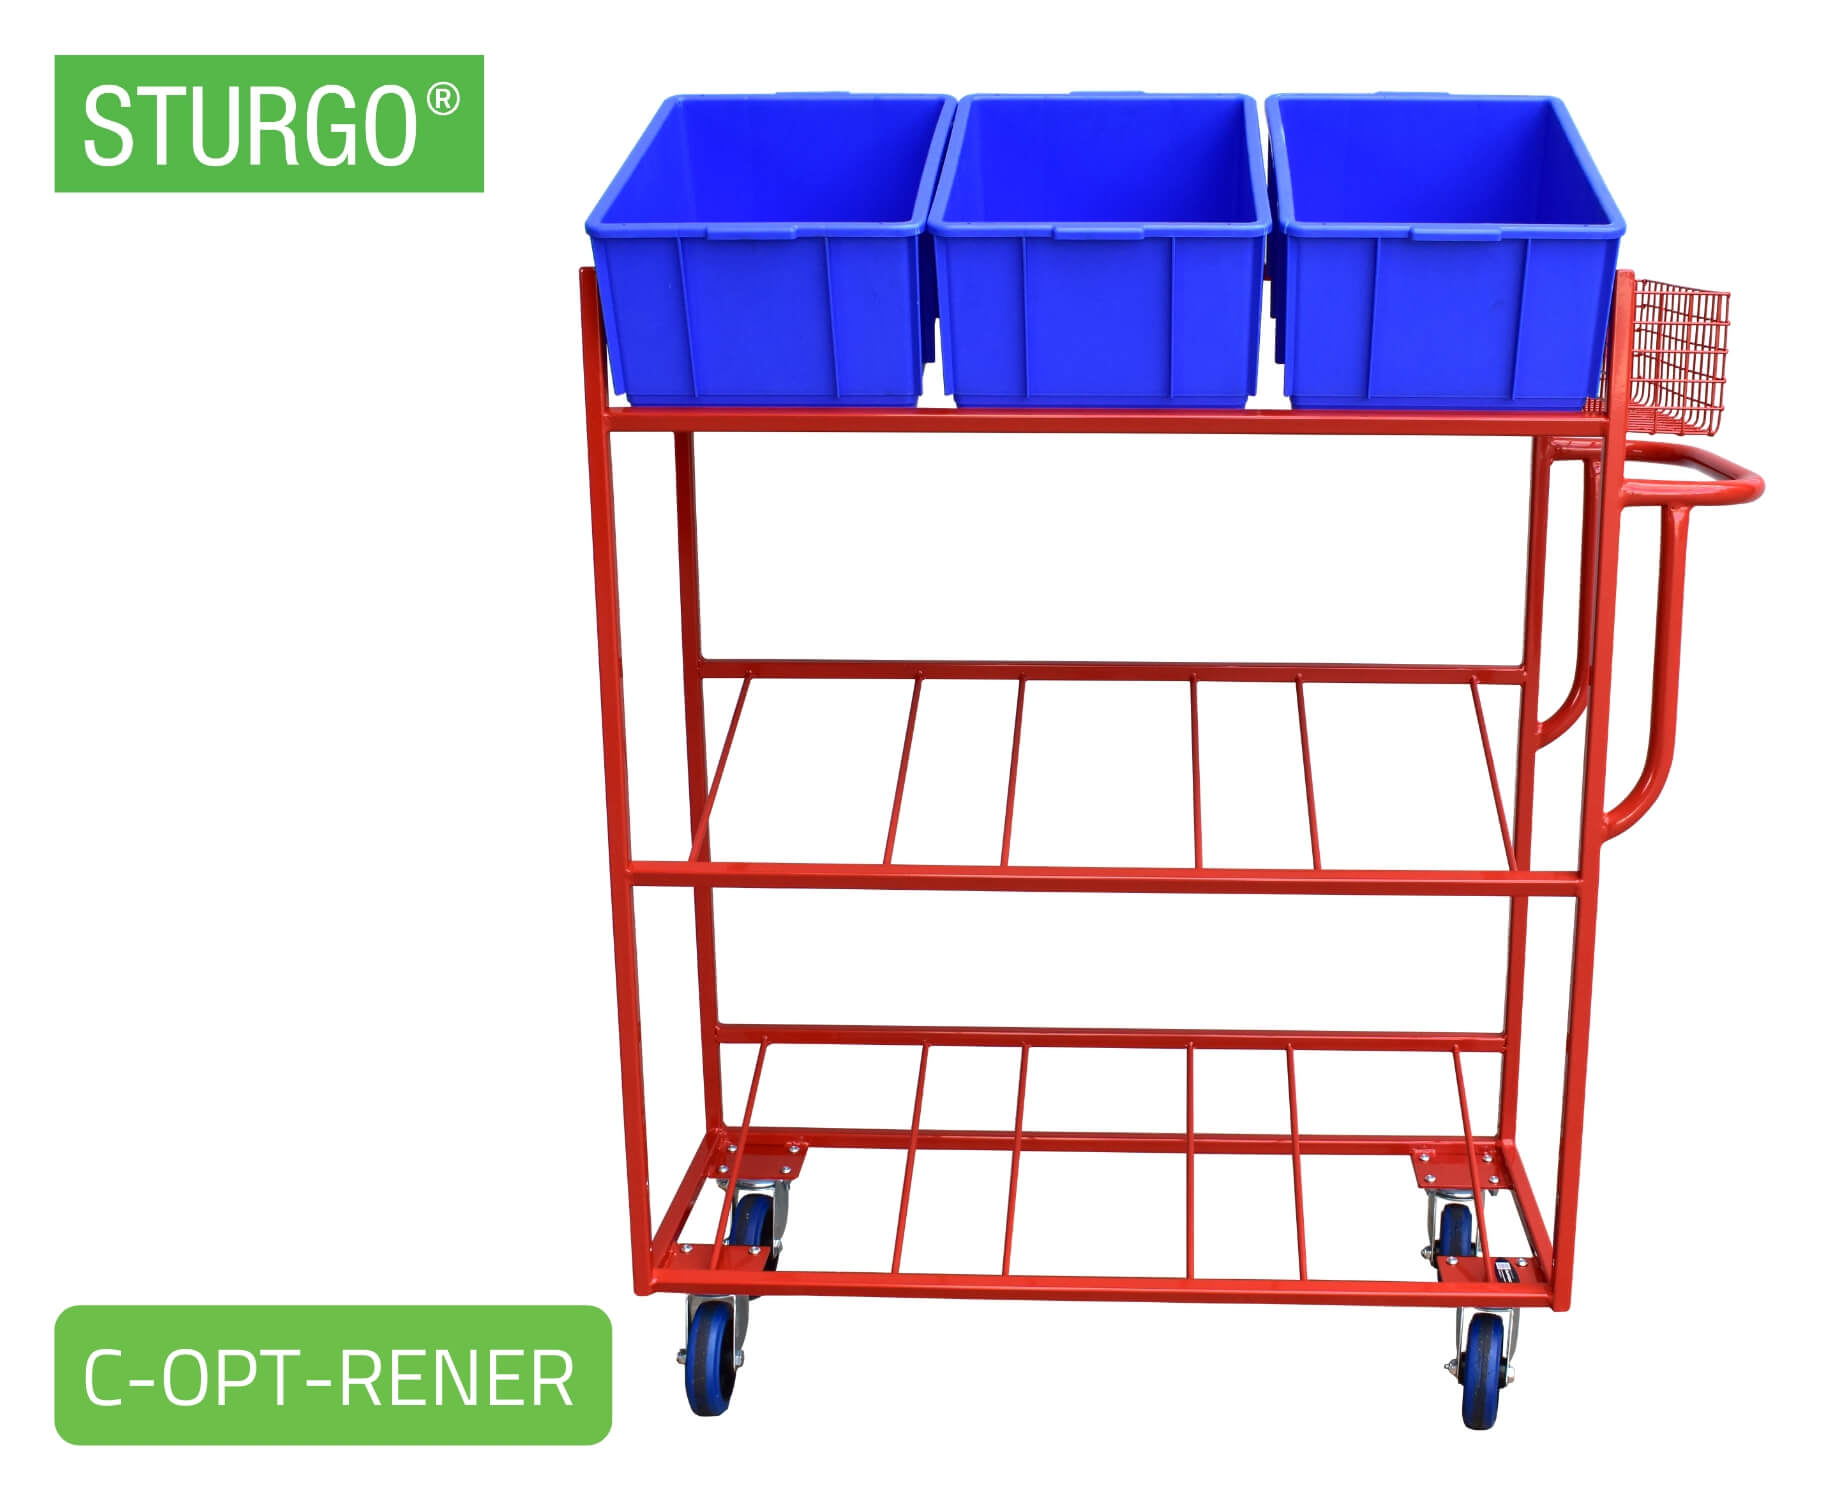 Custom STURGO® Order Picking Trolley